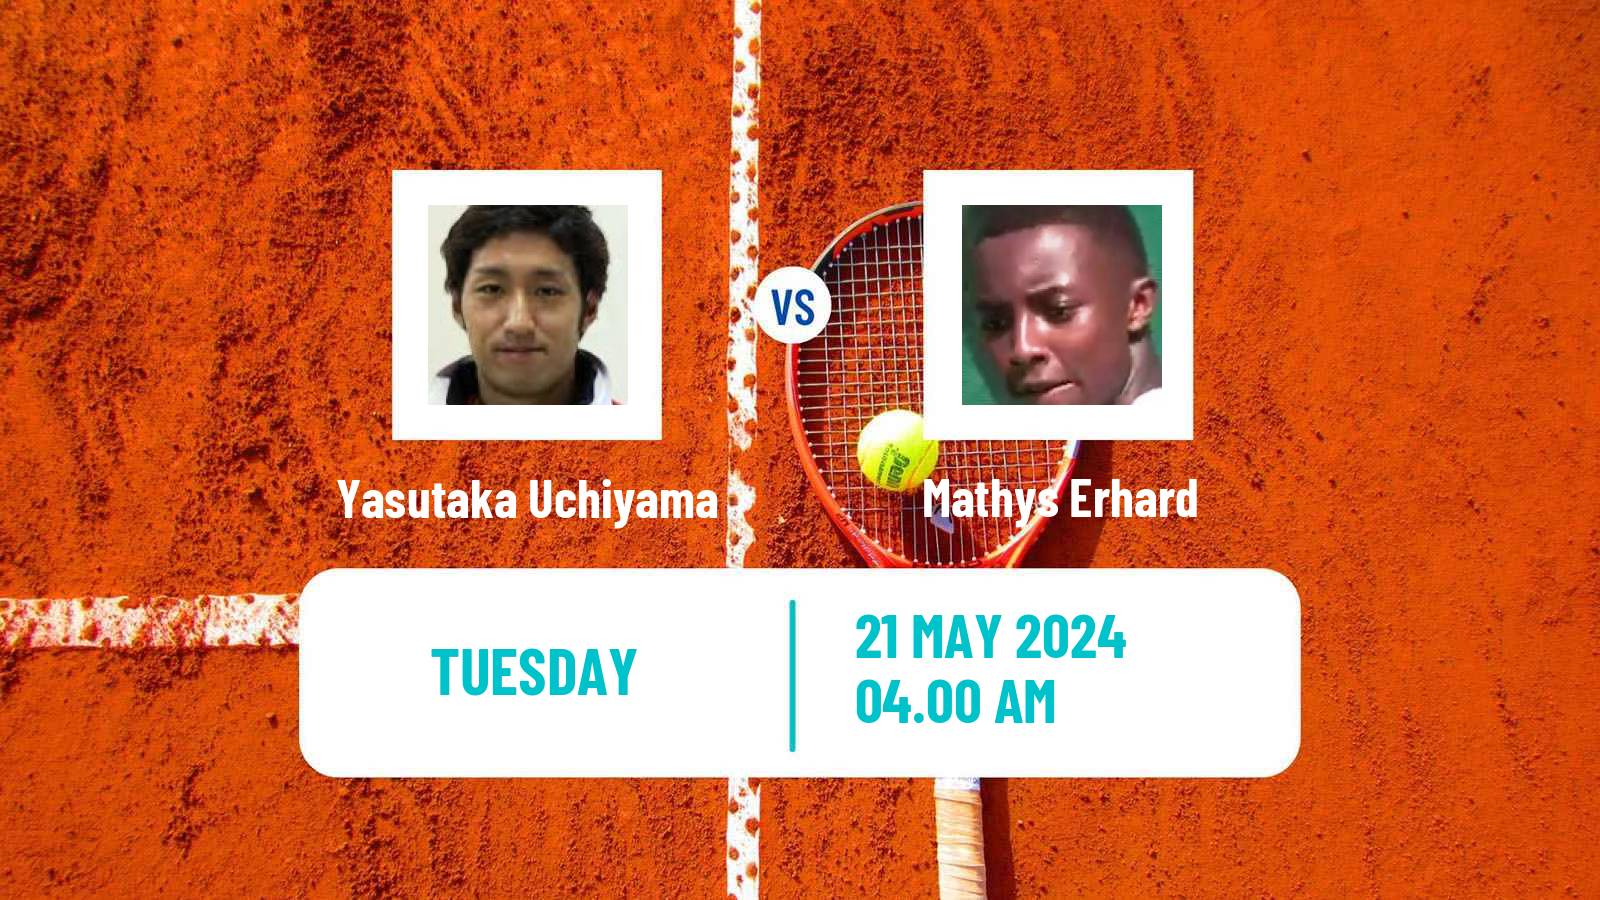 Tennis ATP Roland Garros Yasutaka Uchiyama - Mathys Erhard